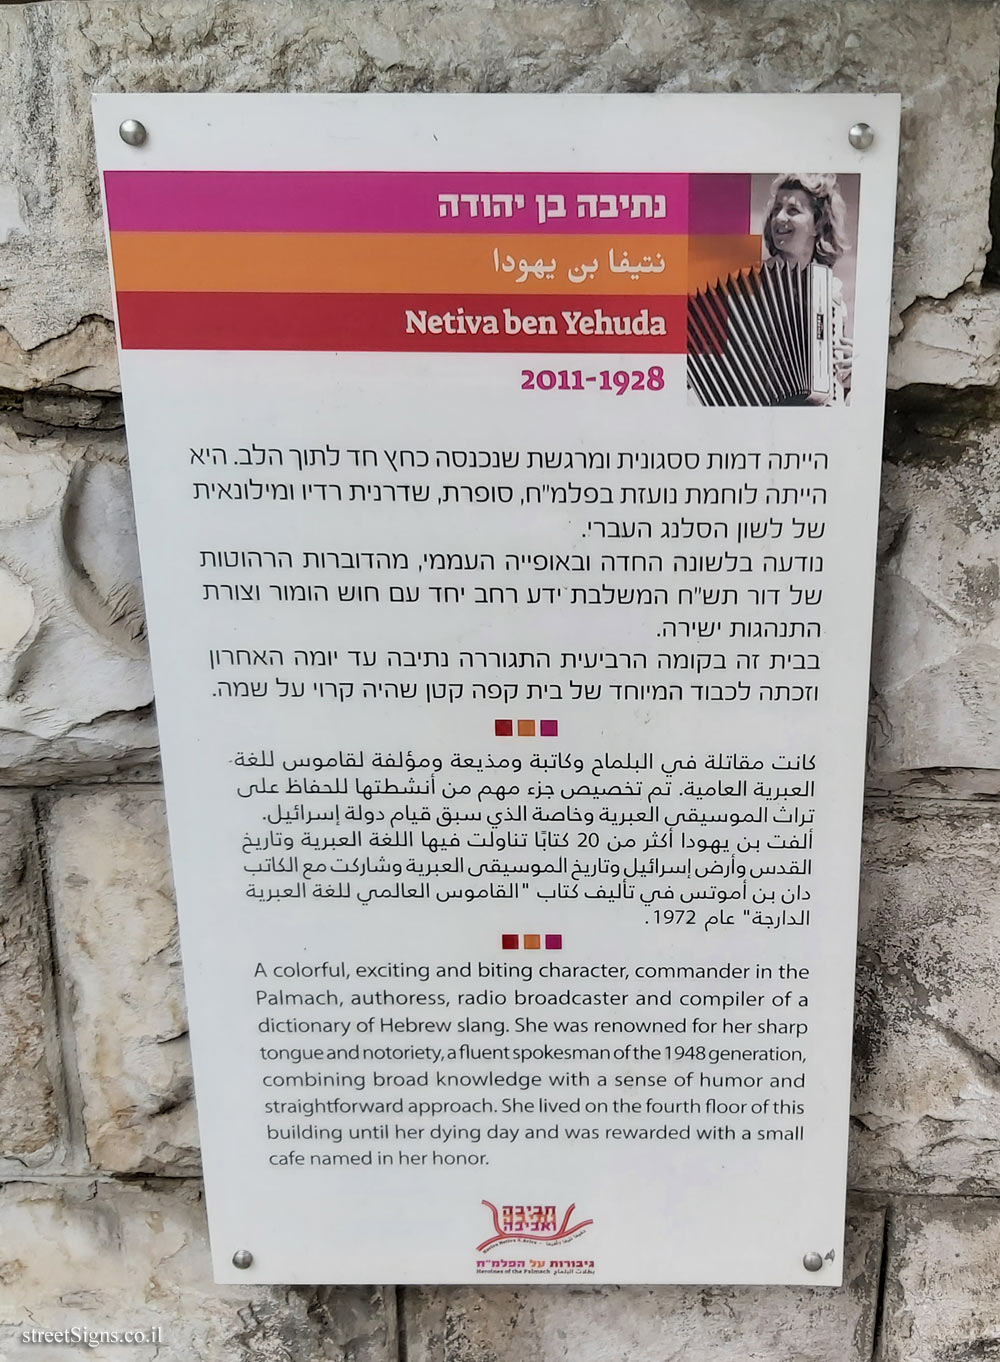 Jerusalem - "Haviva Netiva and Aviva" route - Netiva Ben Yehuda